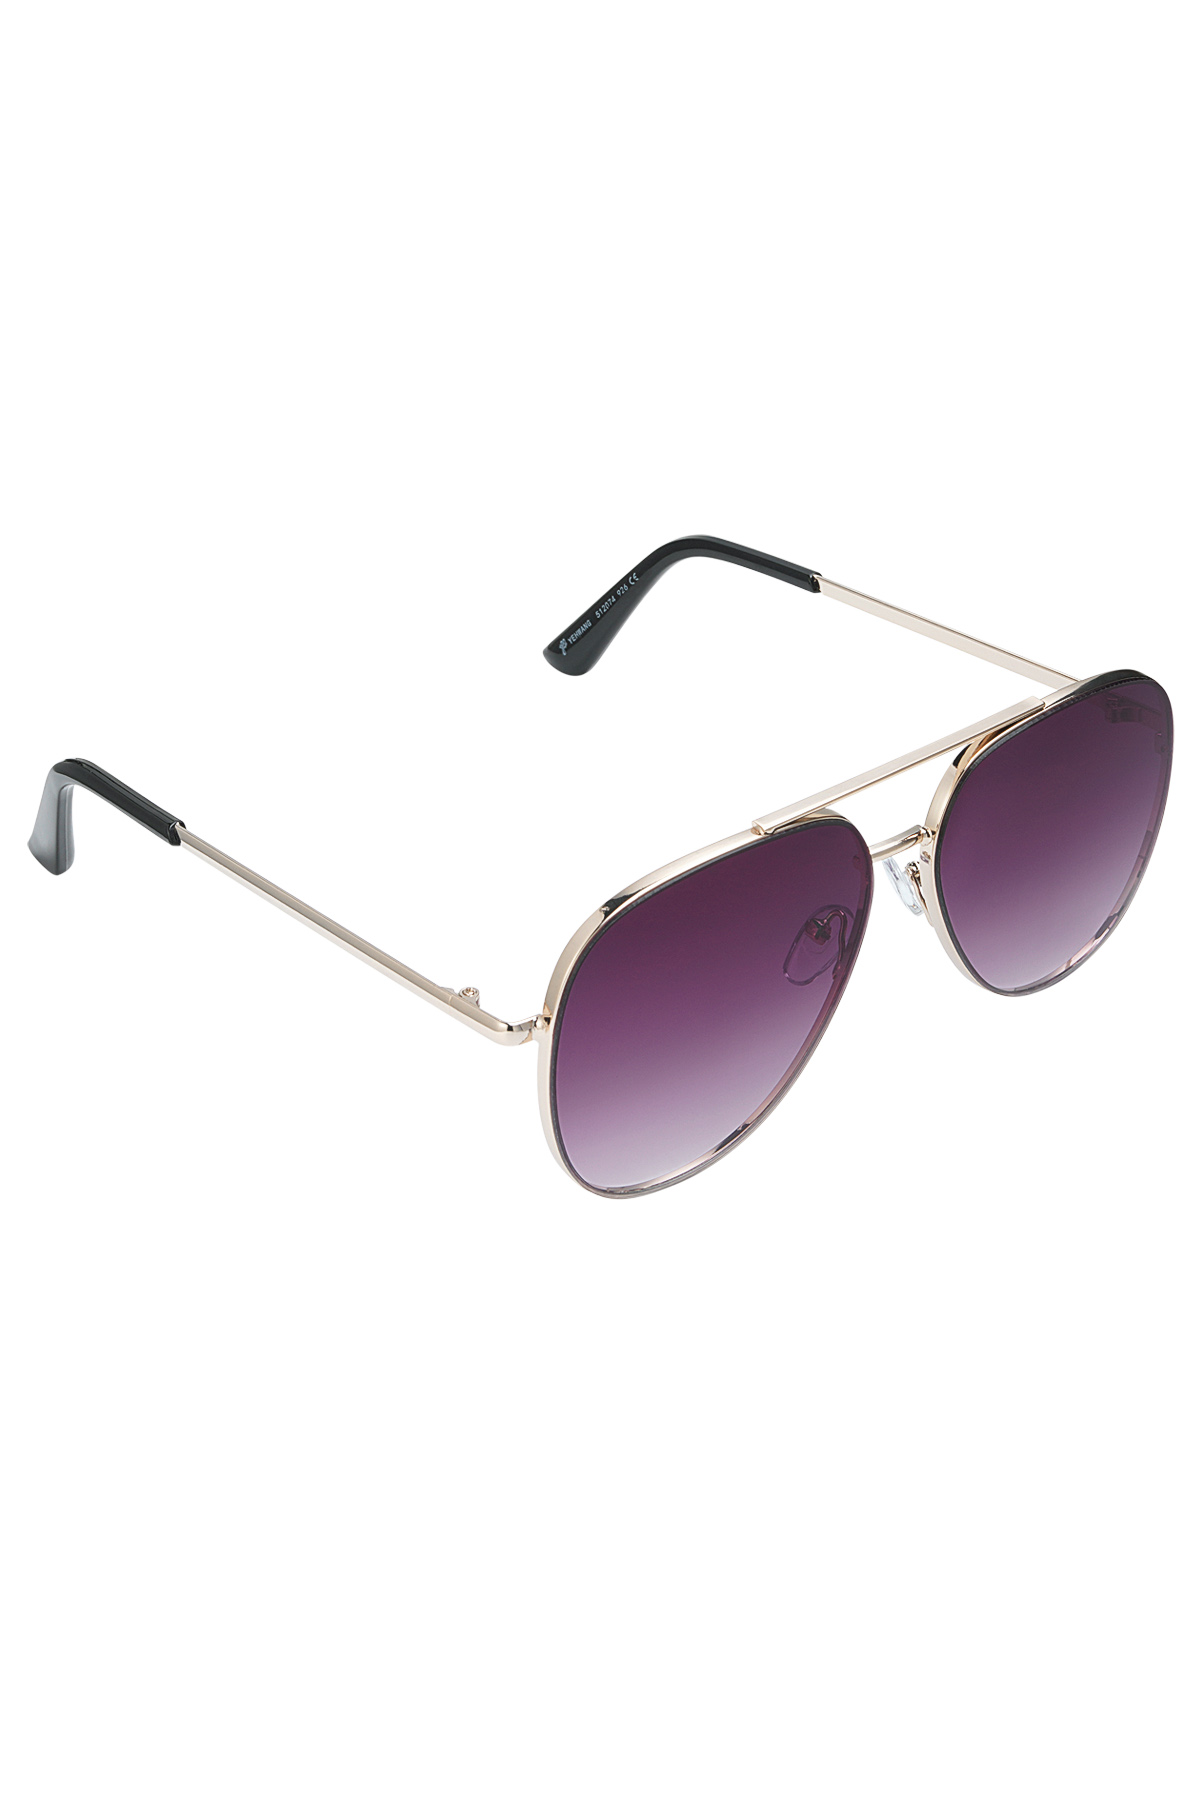 Pilot sunglasses - dark purple